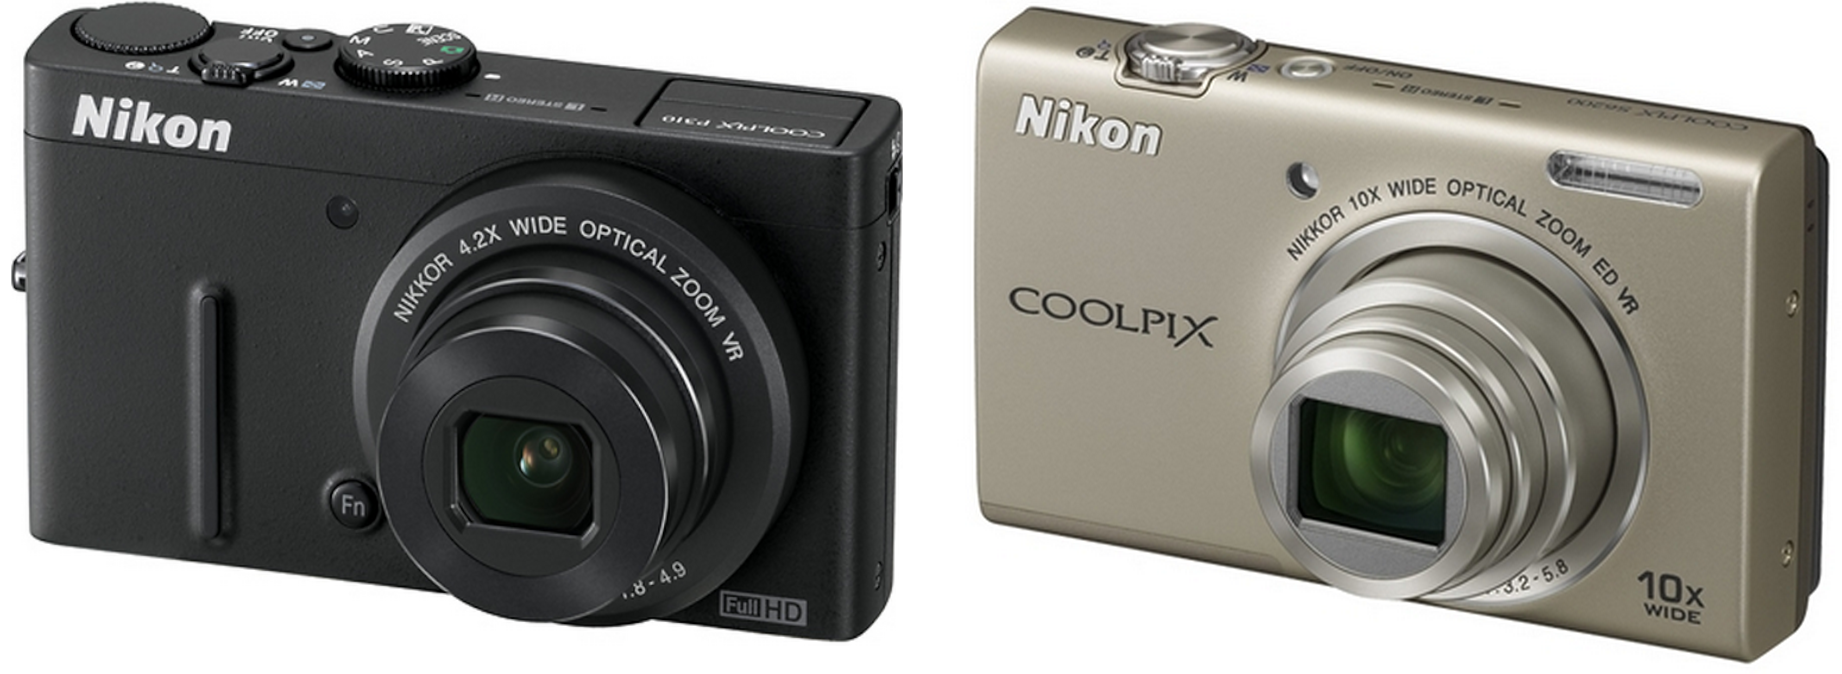 Nikon Coolpix P310 or S6200 16 Megapixel Digital Cameras: $150